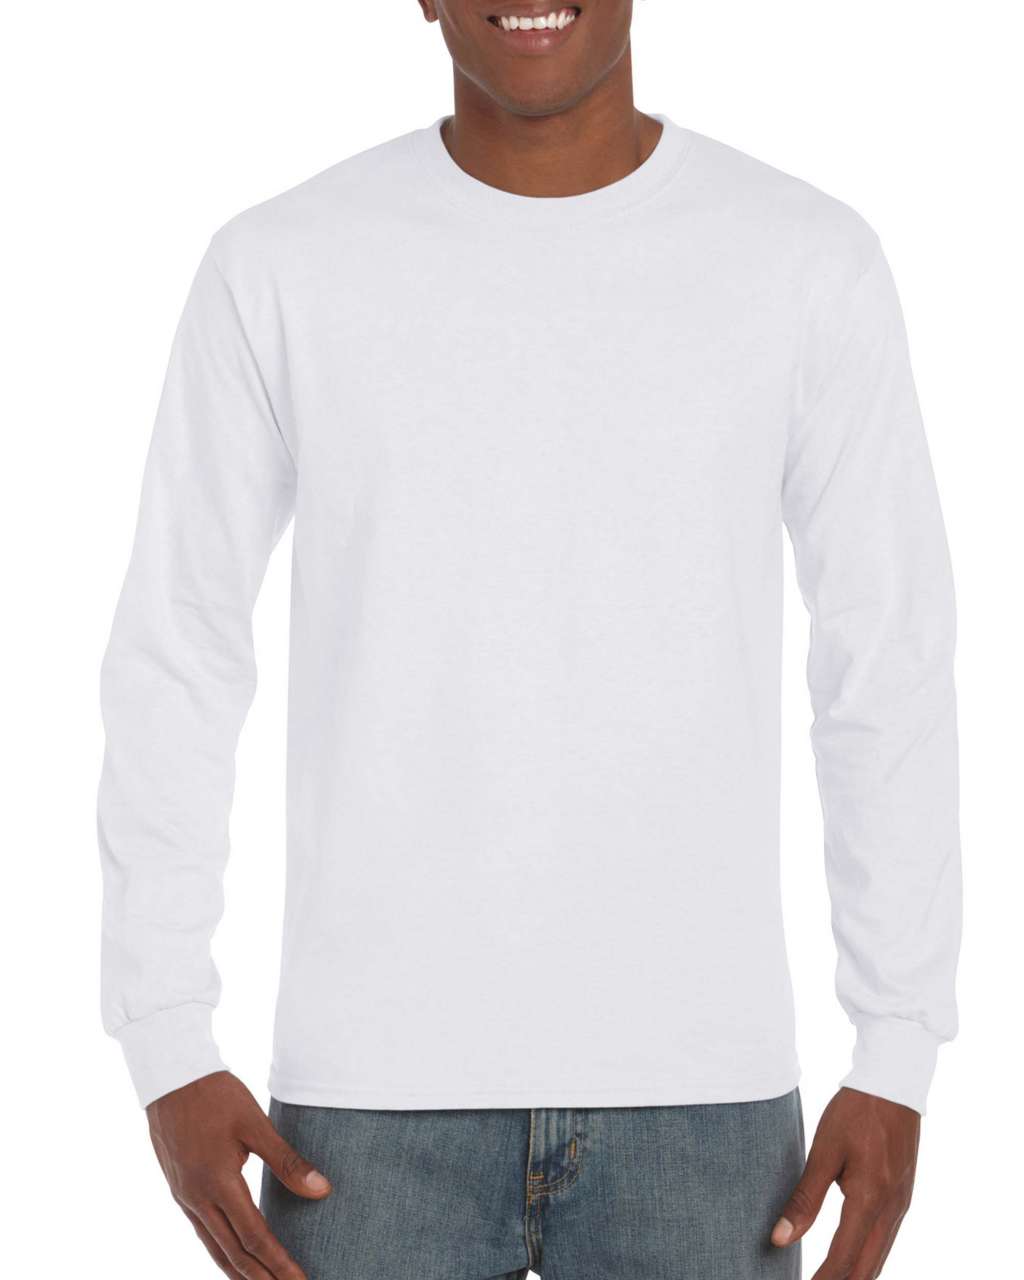 Gildan Hammer Adult Long Sleeve T-shirt - white